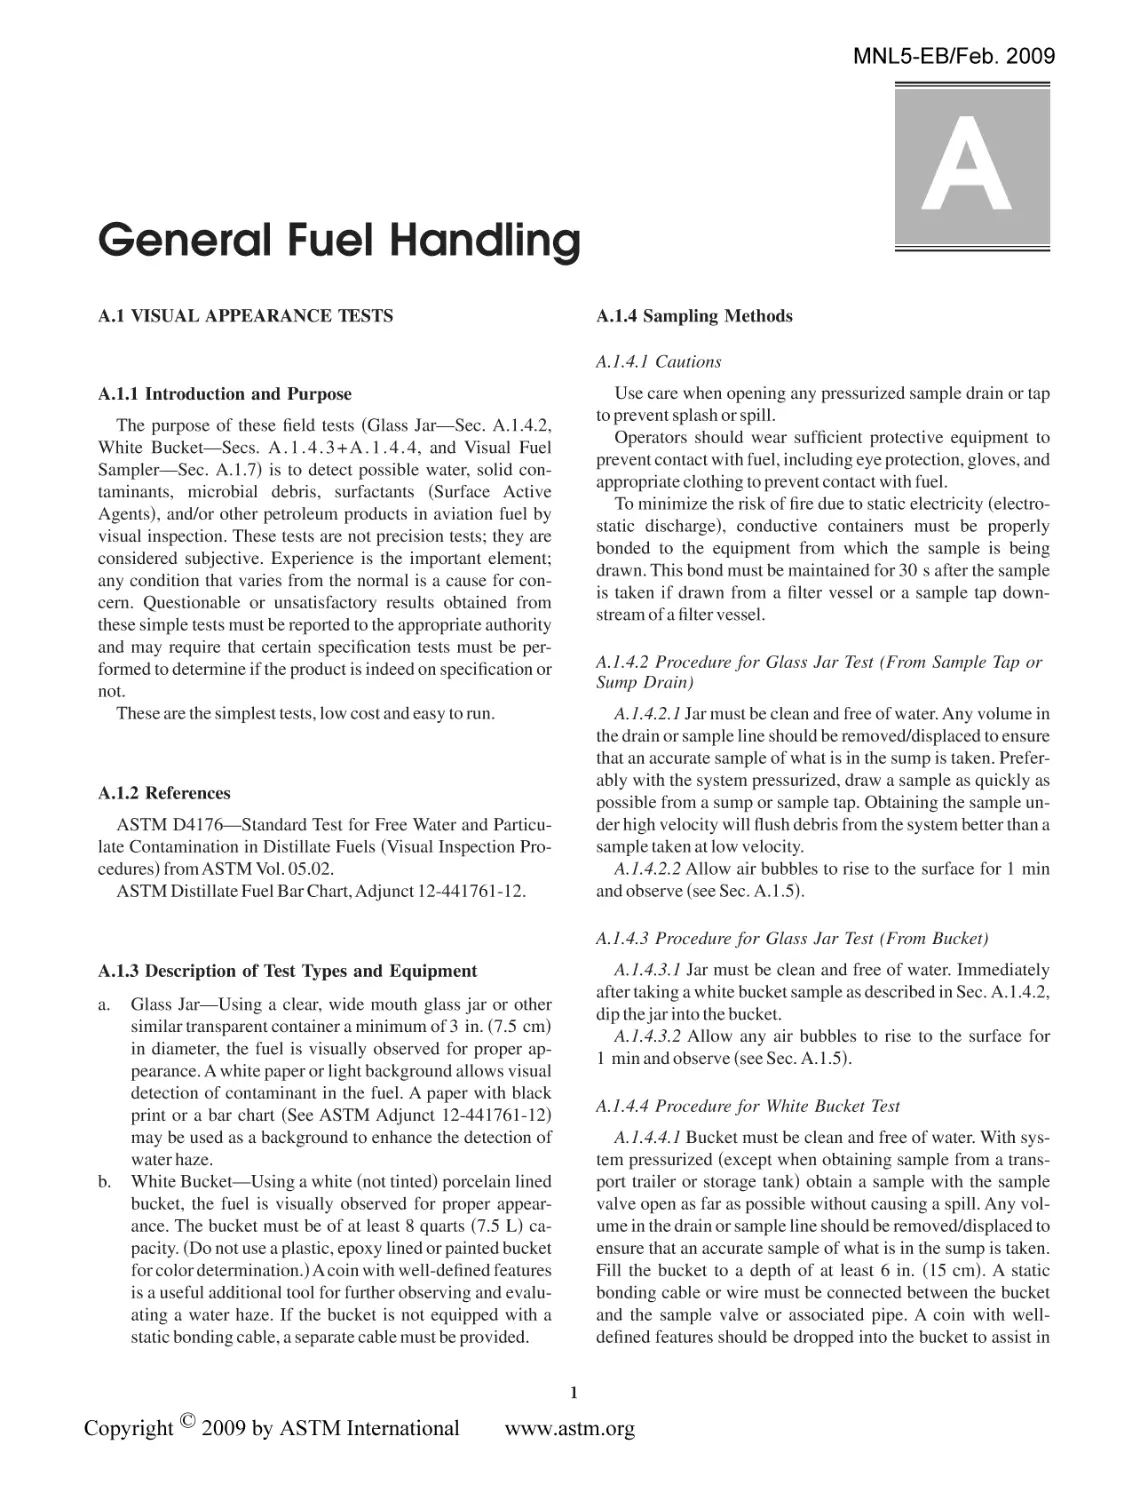 General Fuel Handling